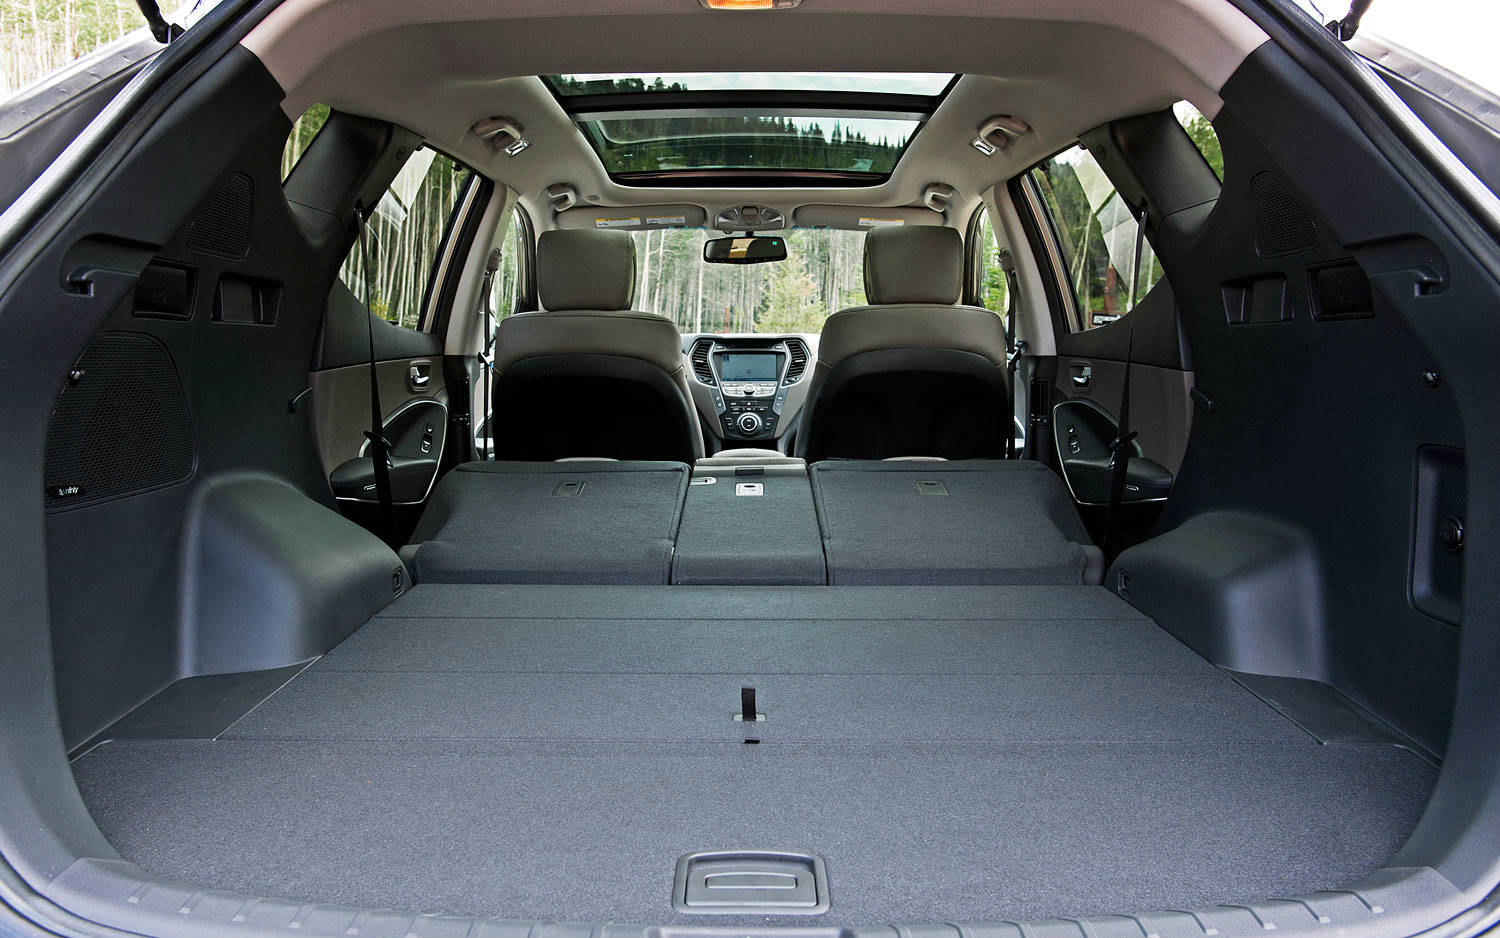 The 2013 Hyundai Santa Fe Sport Entered to the WARD S 10 Best Interiors 